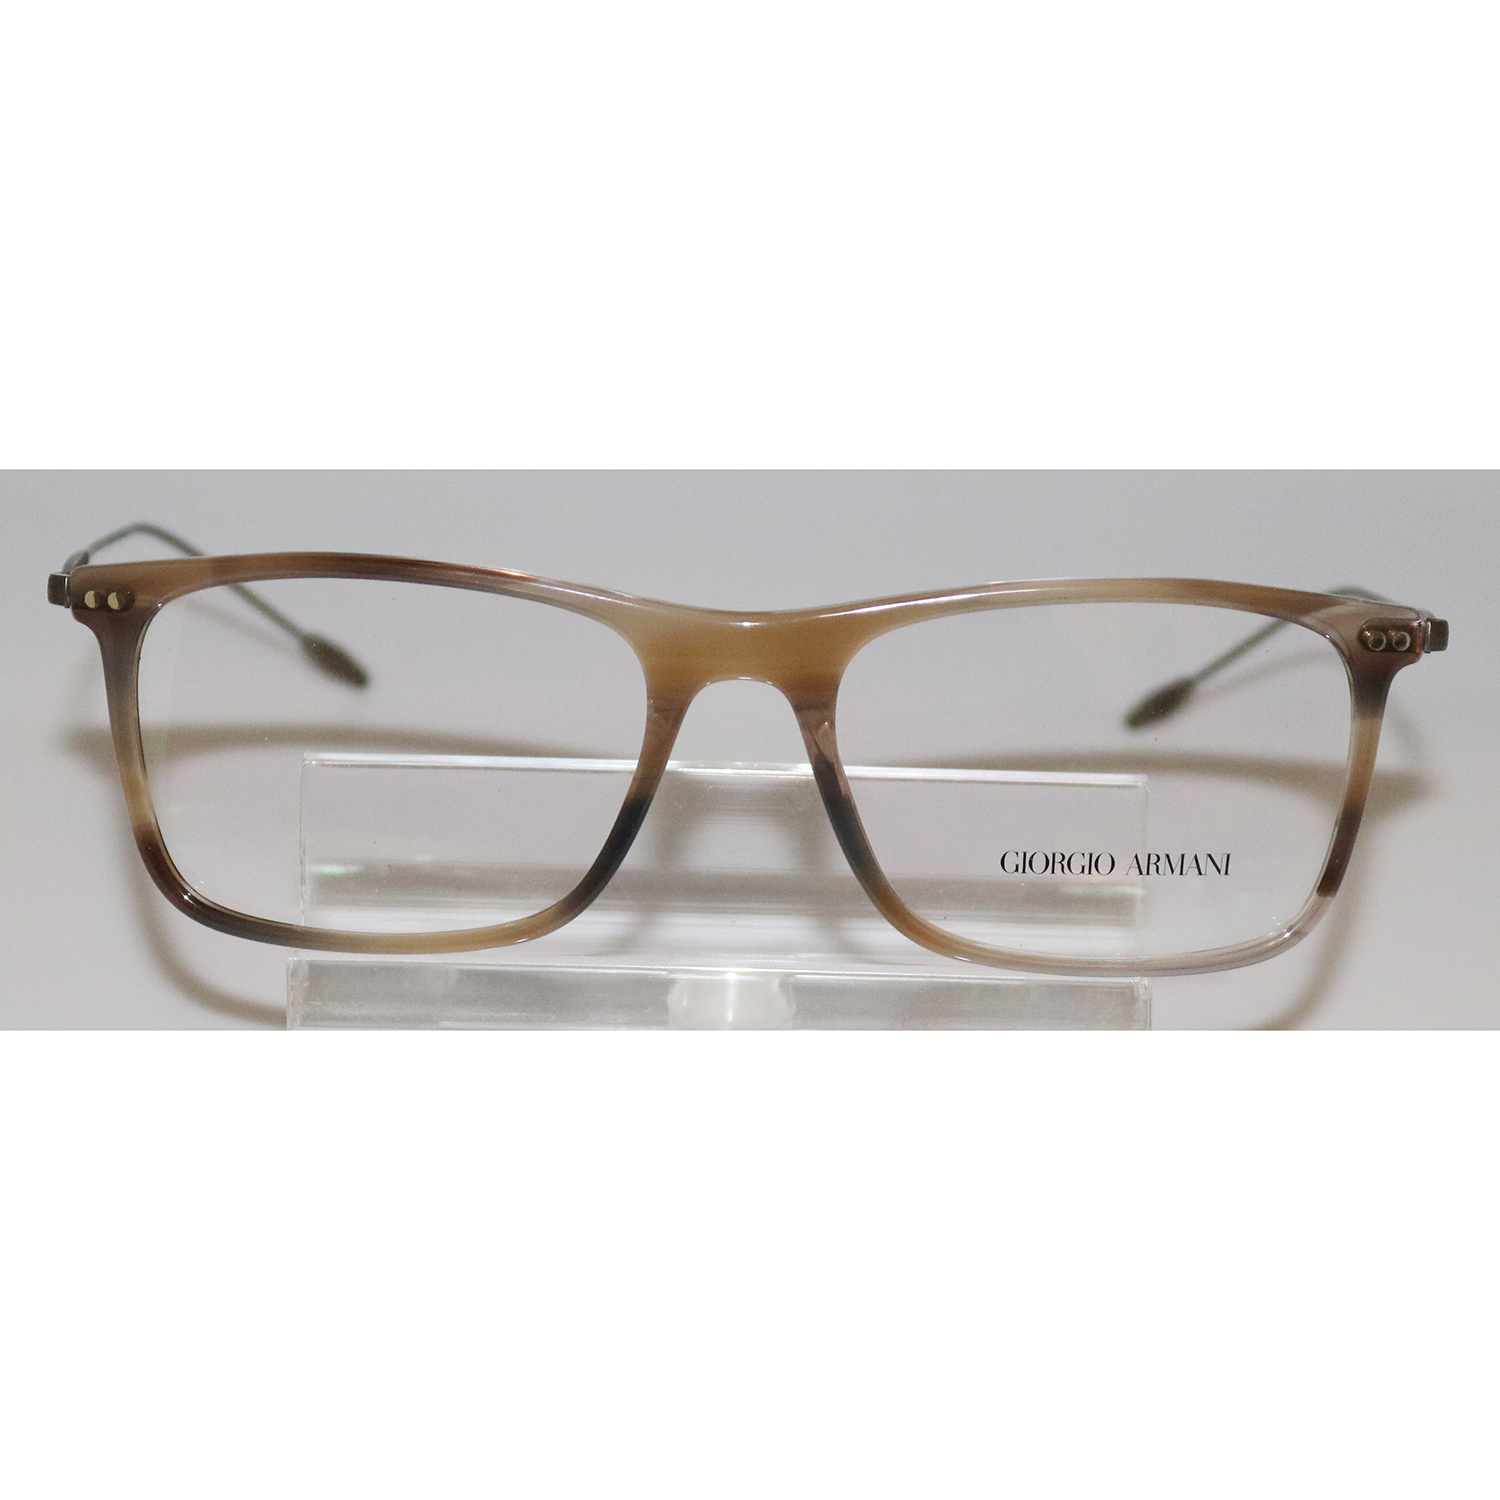 Giorgio Armani 7154 5660 Striped Brown Eyeglasses - See My Glasses